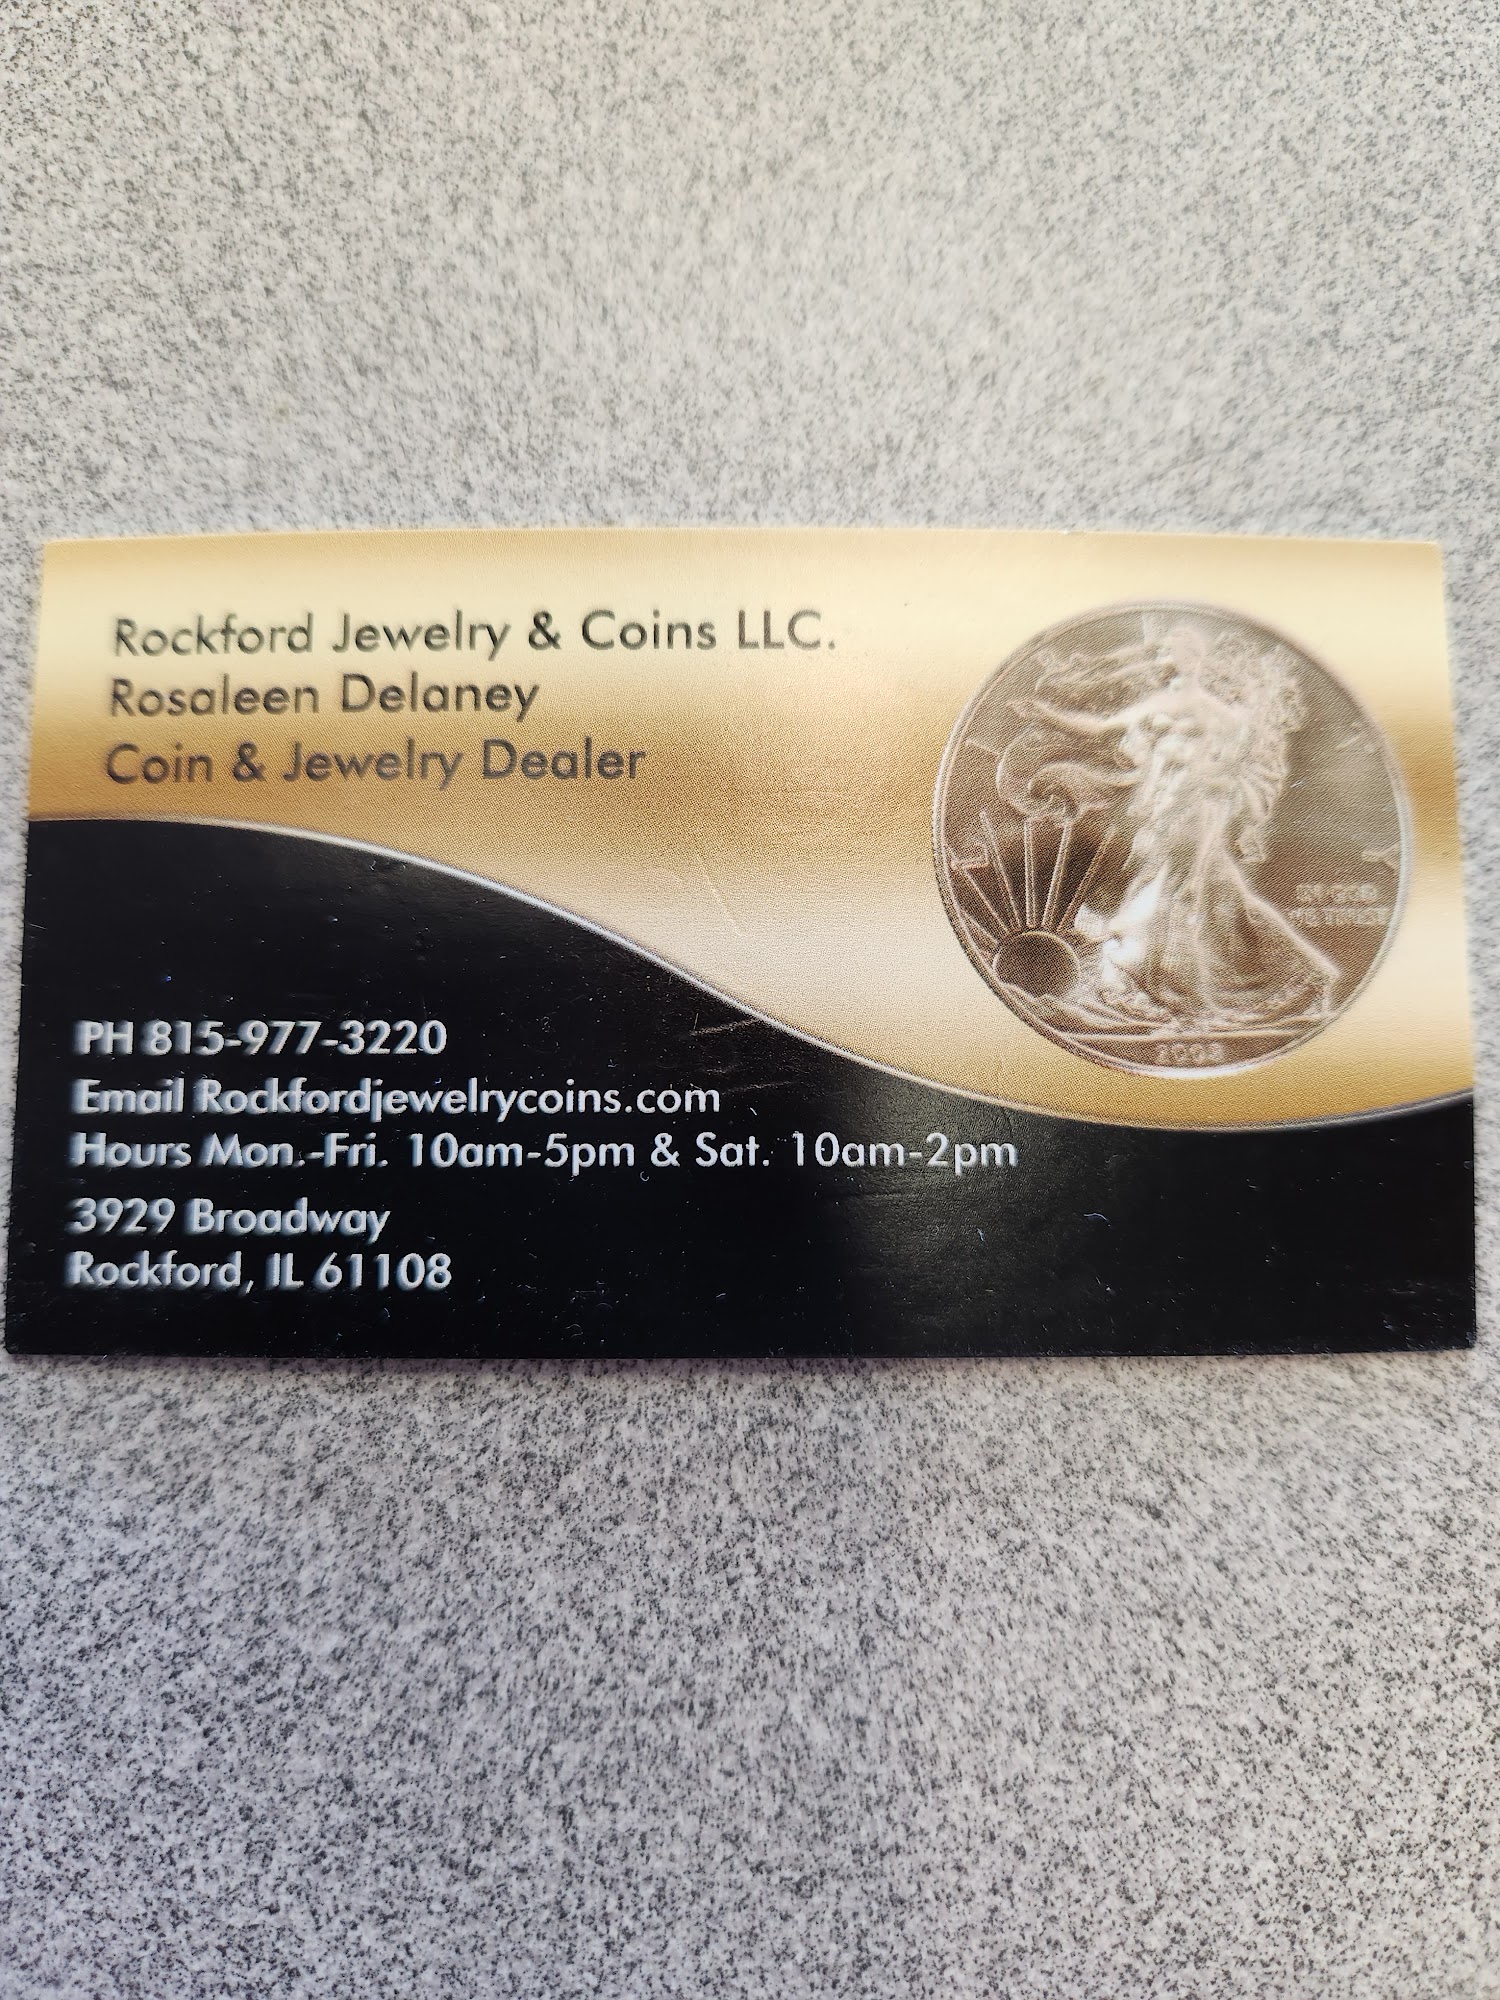 Rockford Jewelry & Coins LLC